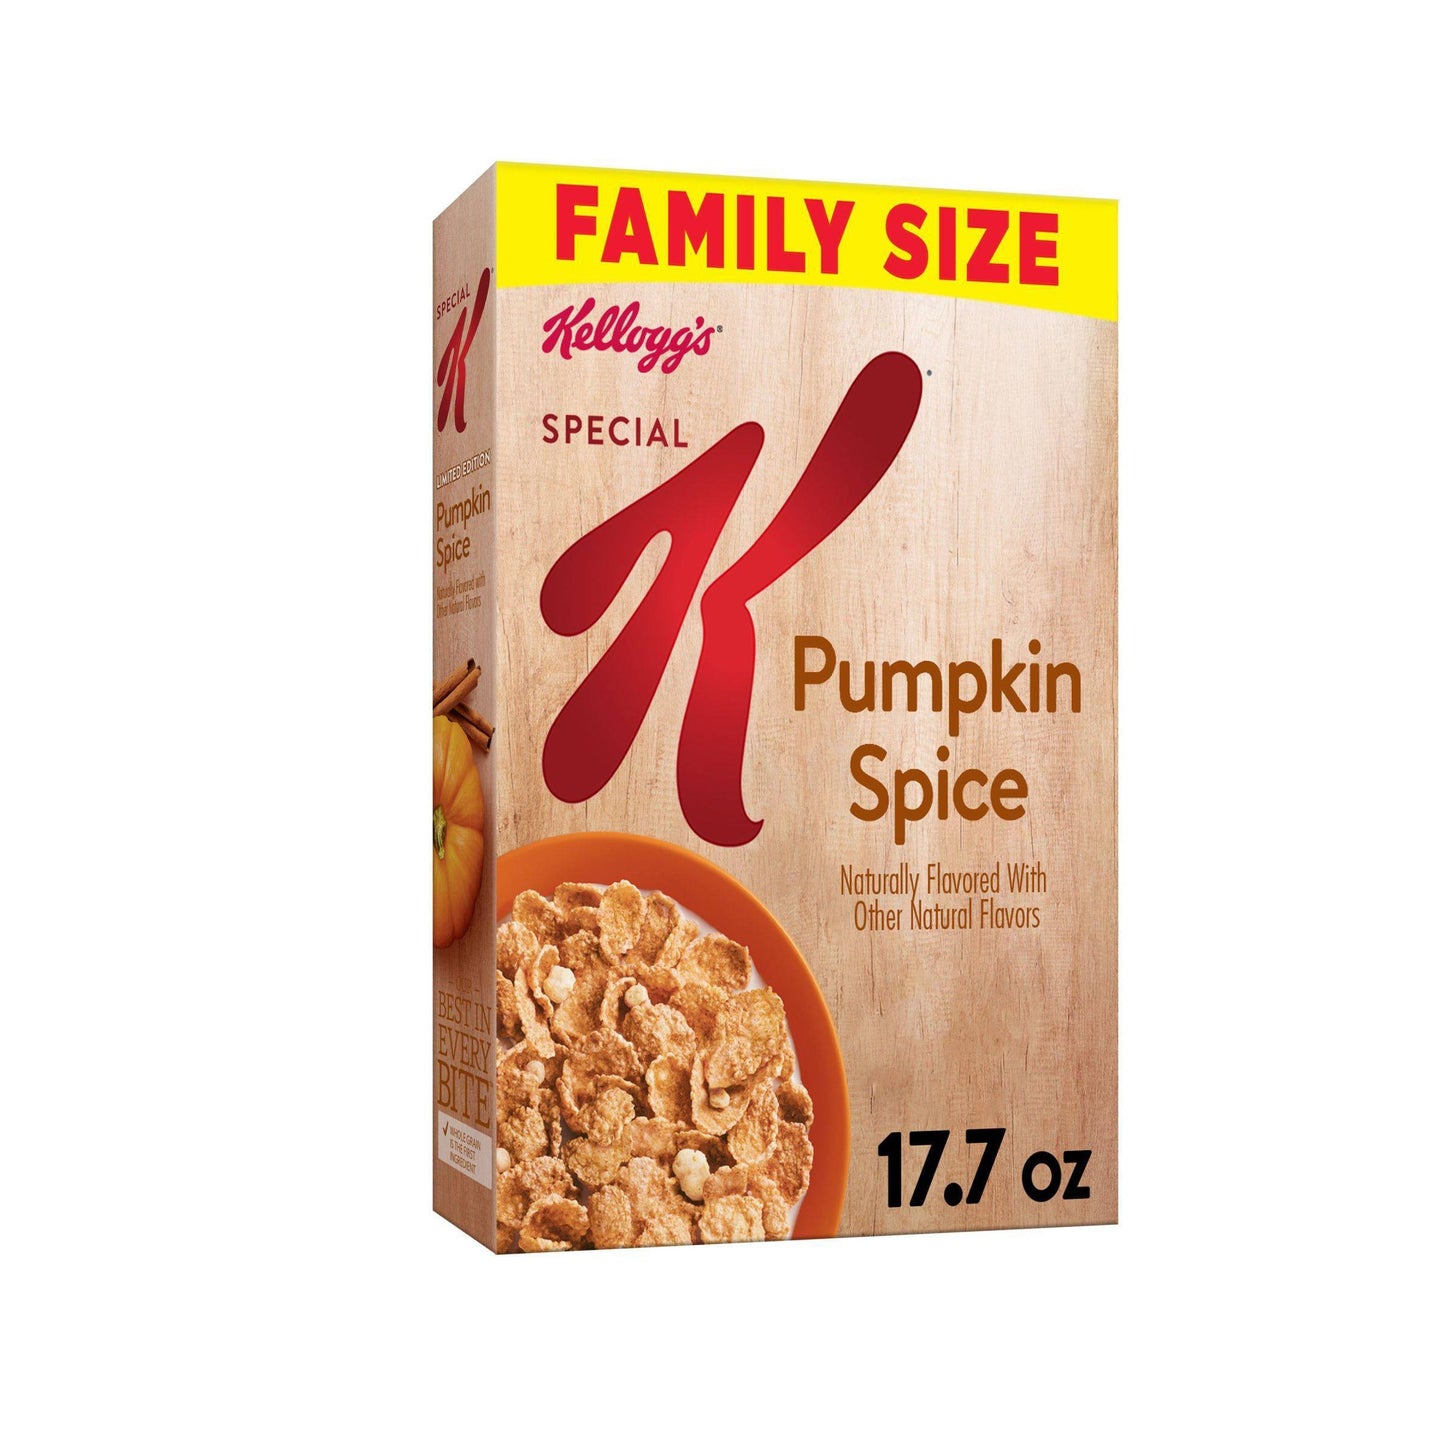 Special K Pumpkin Spice Breakfast Cereal - 17.7oz - Kellogg's - Limited Edition